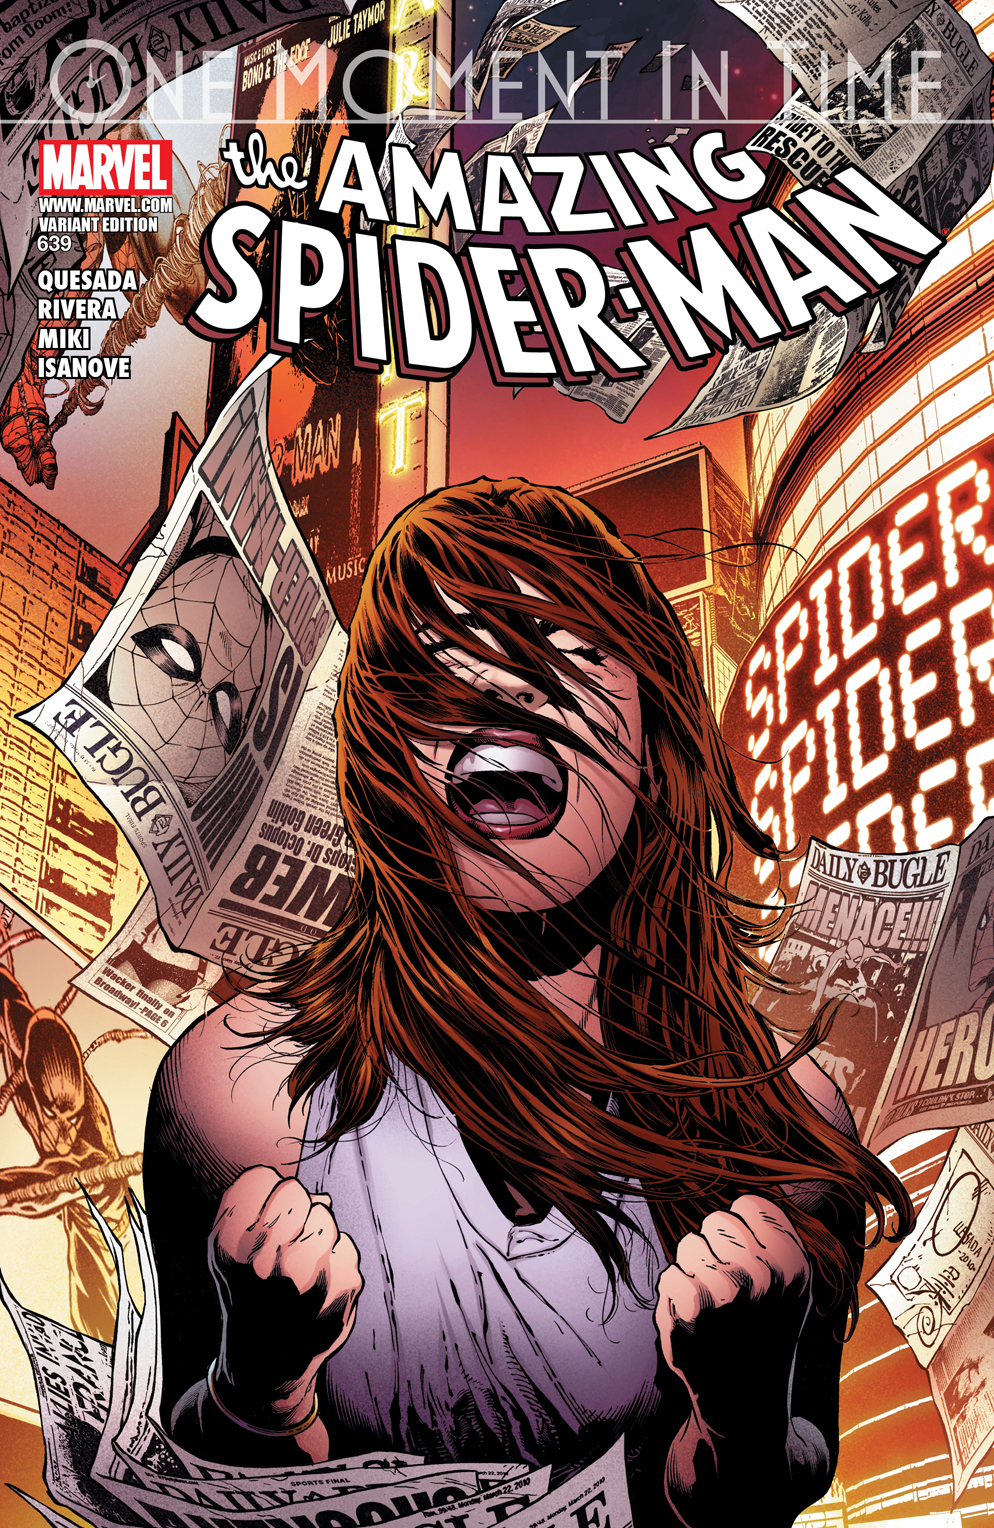 Amazing Spider-Man (1999) #639 (VARIANT)